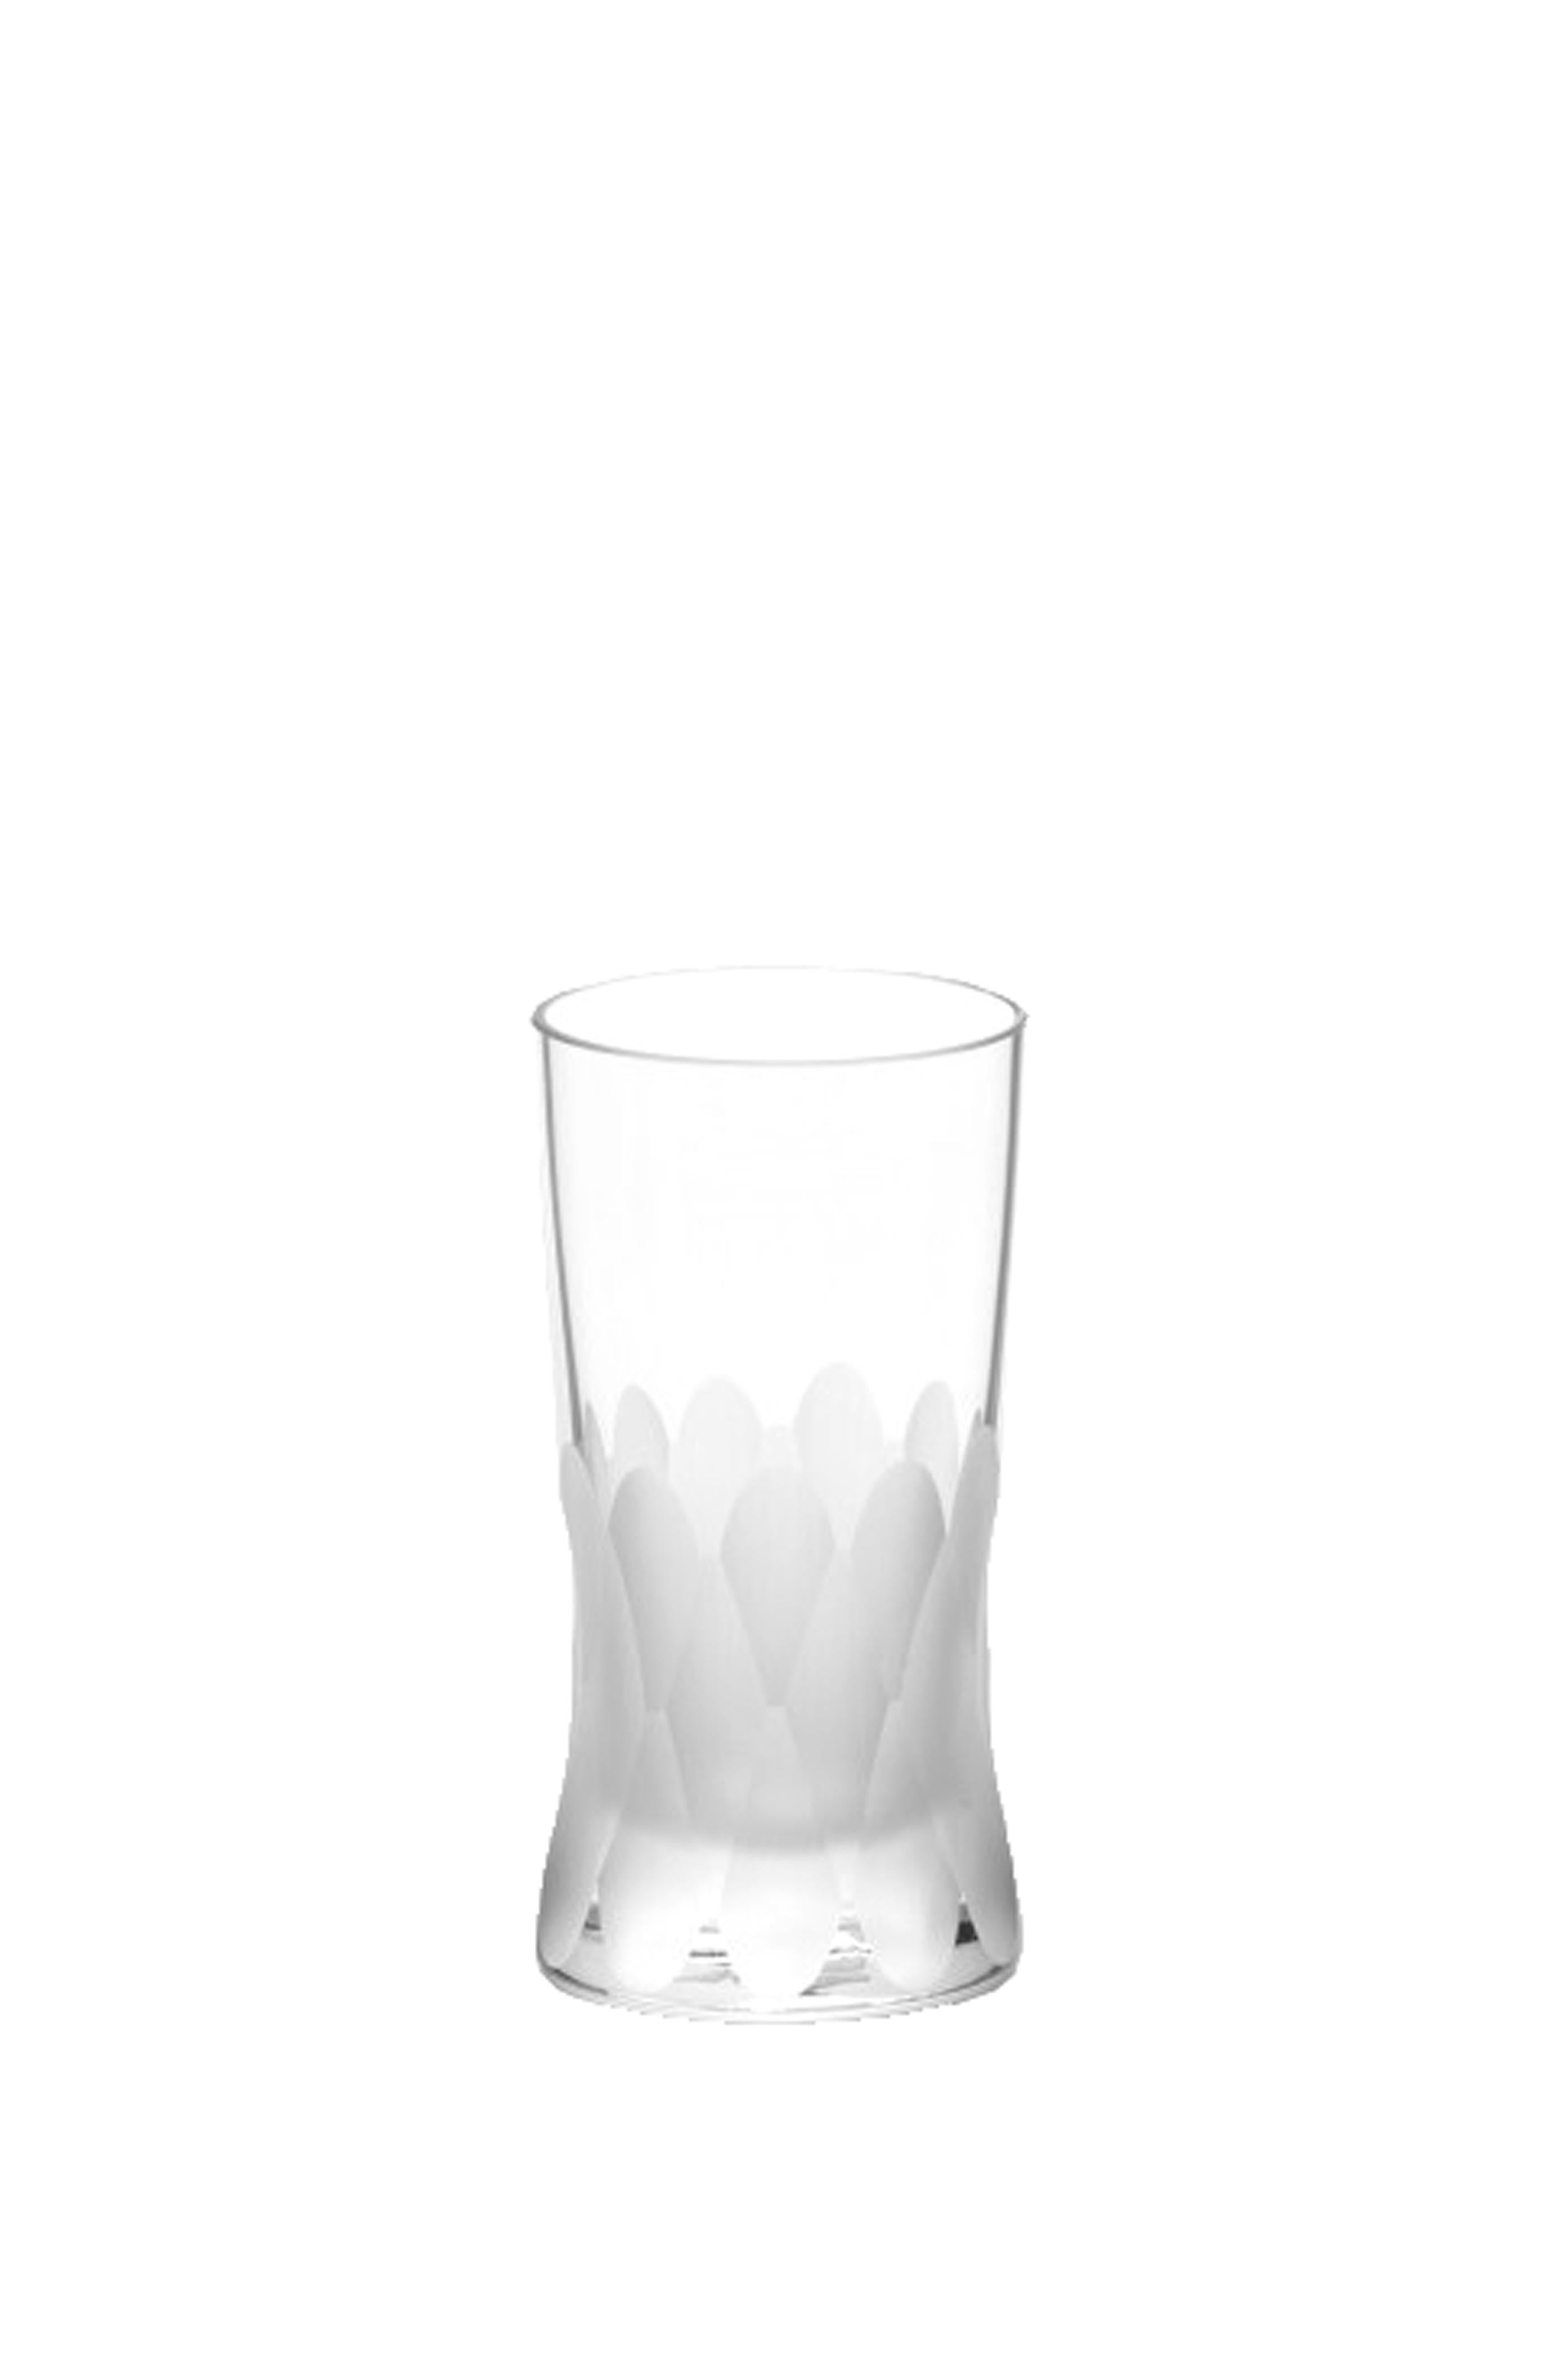 Contemporary Martino Gamper Handmade Irish Crystal Water Glass 'Cuttings' Series For Sale